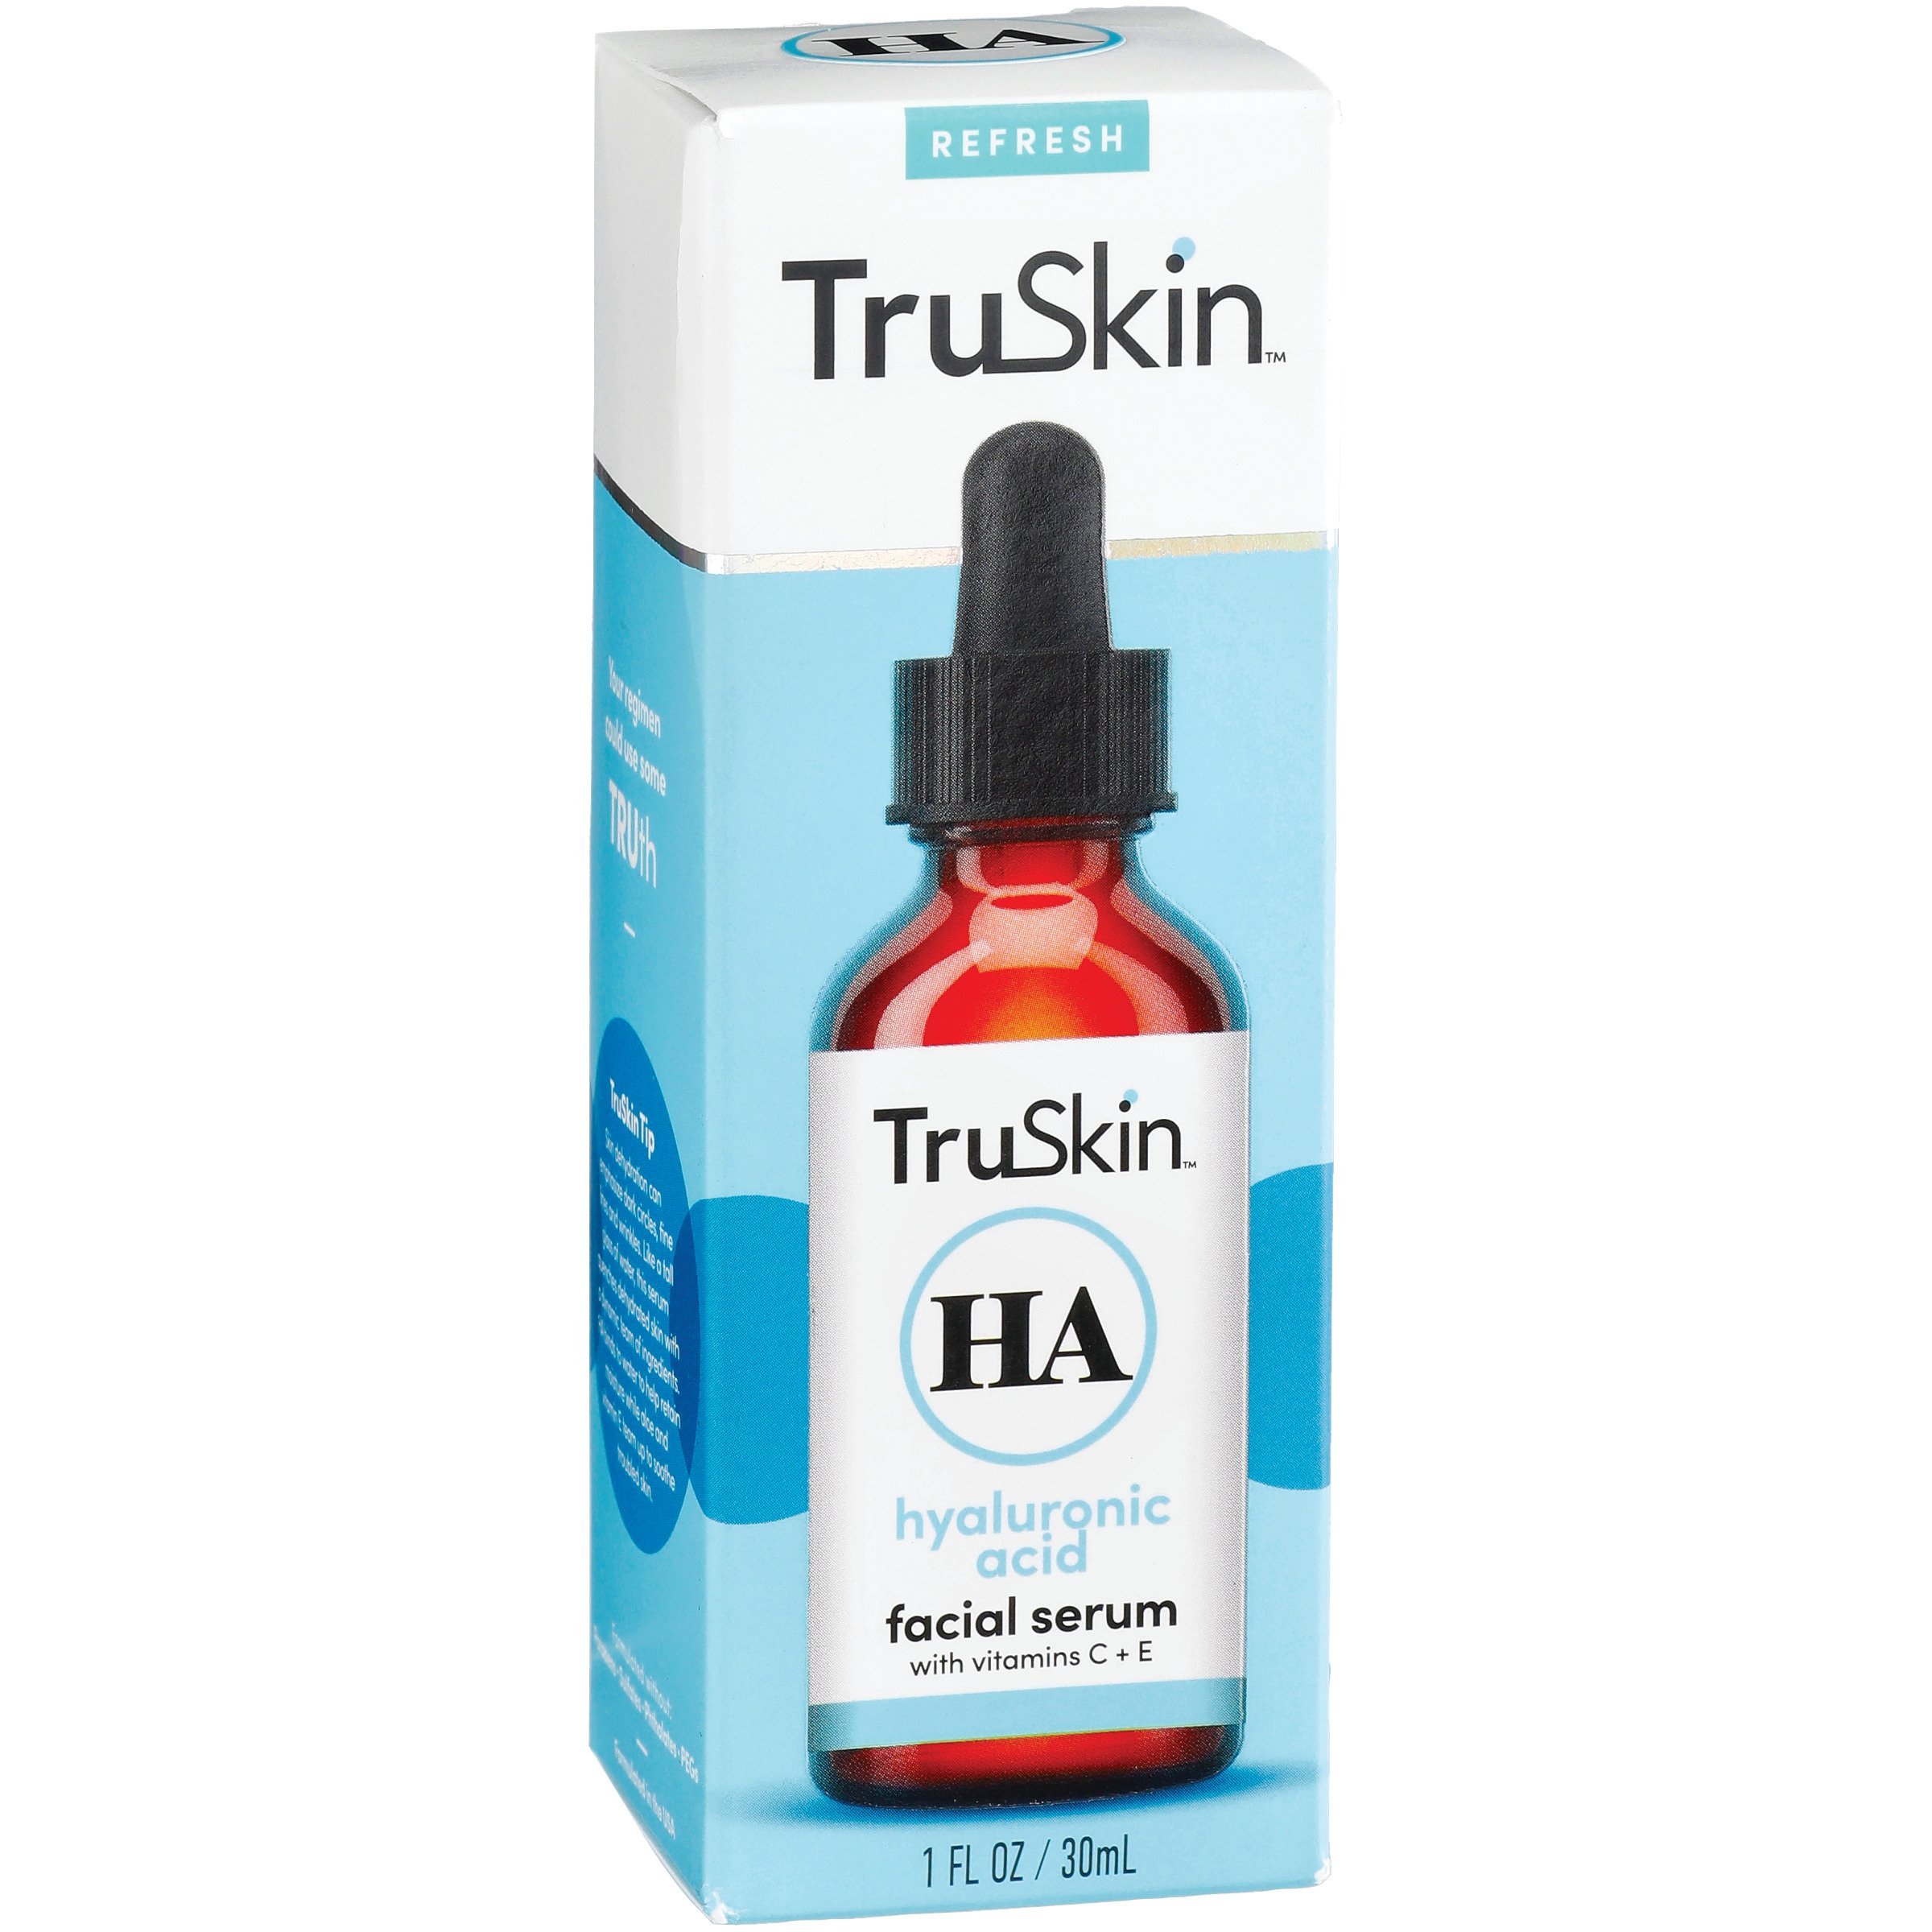 TruSkin Naturals Vitamin C Serum Review